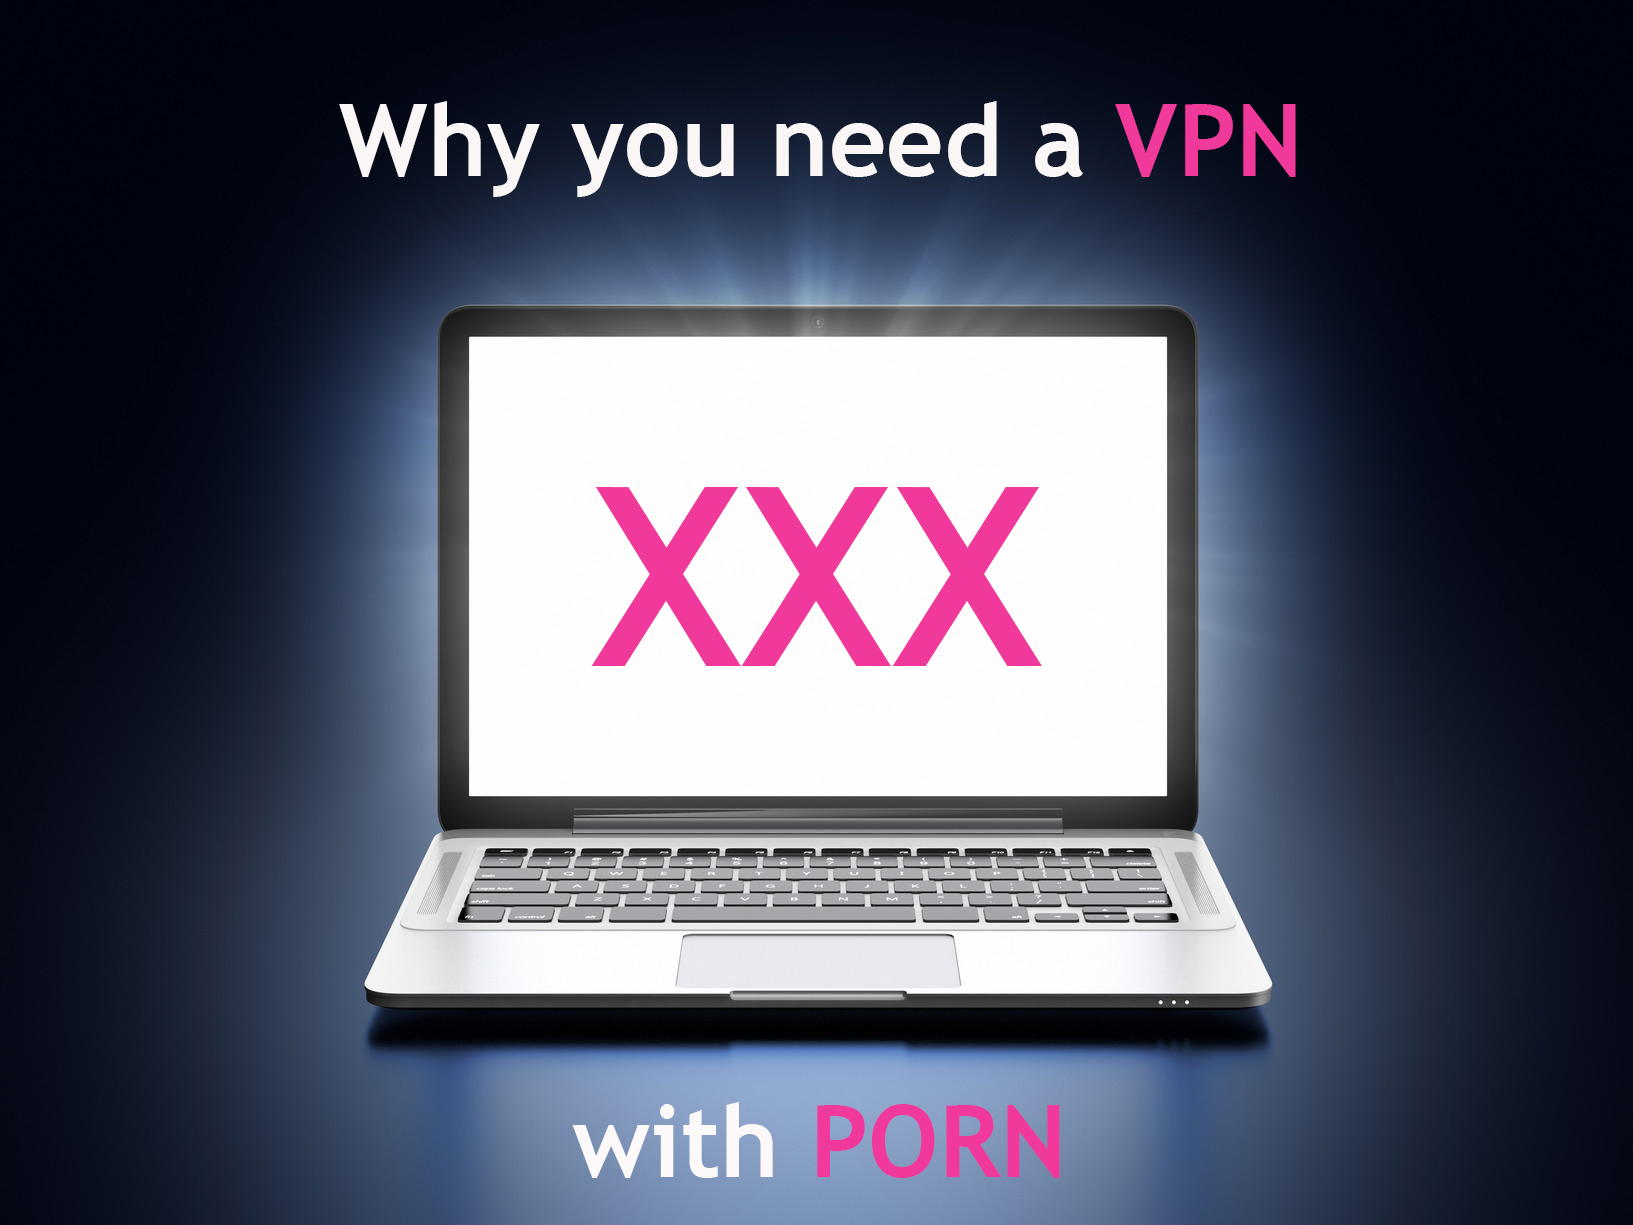 Free Internet Teen Porn Sites No Credit Card 24